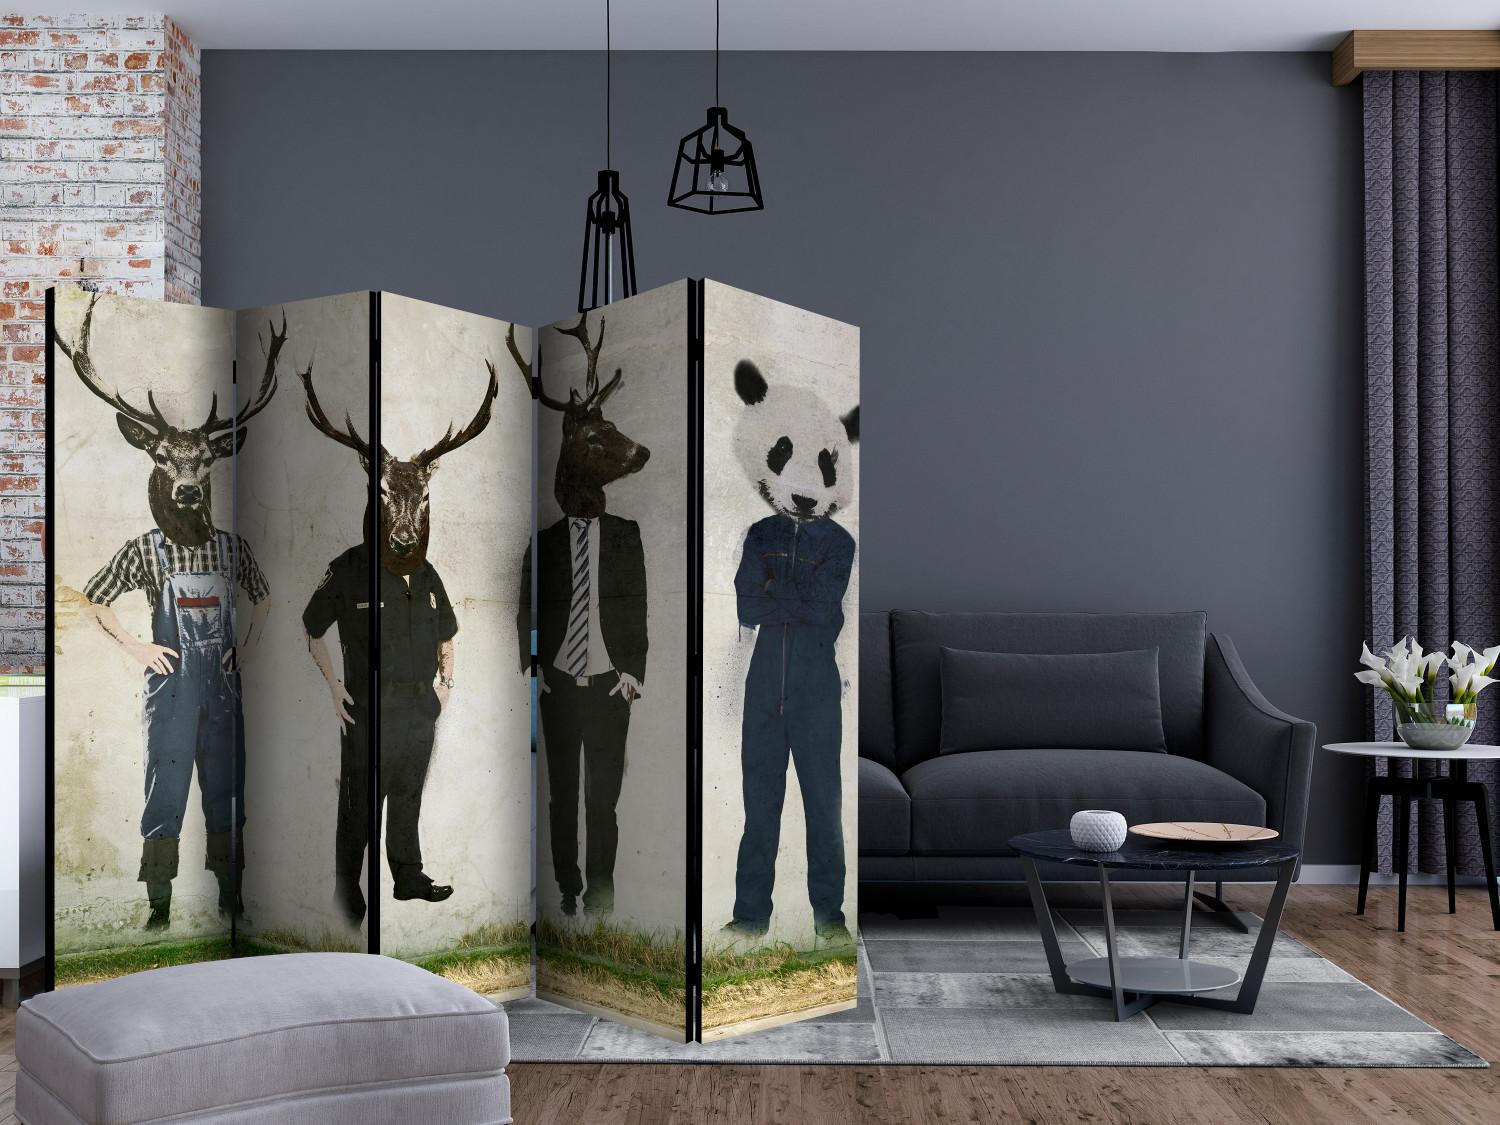 Room Divider Man or Animal? II (5-piece) - human figures with animal heads